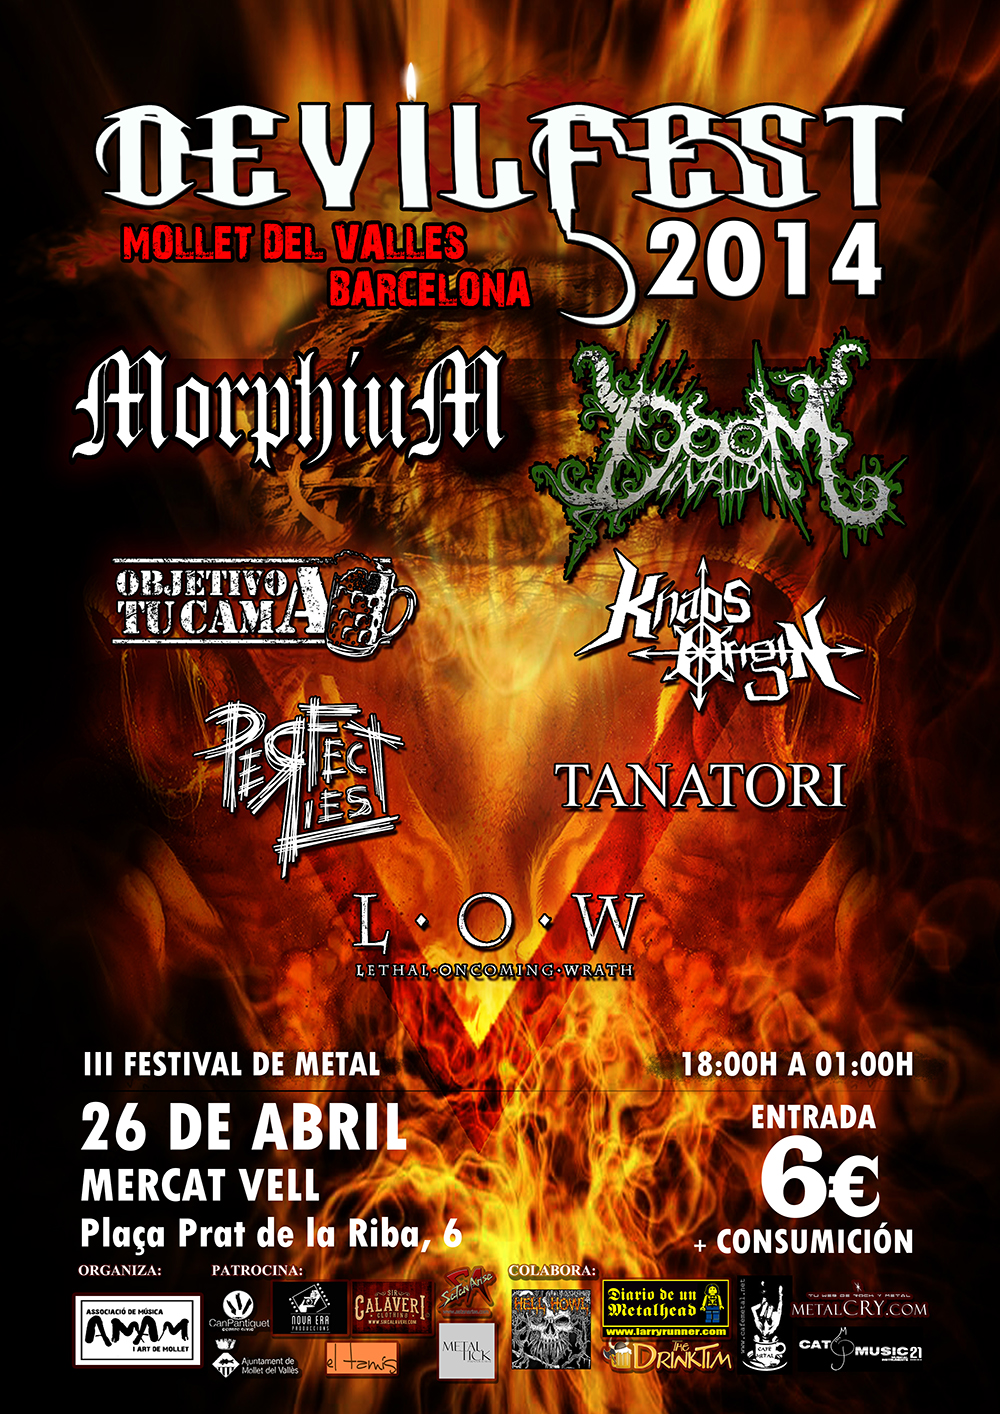 Devilfest 2014 - 26/04/2013 Mercat Vell (Mollet Del Vallès)